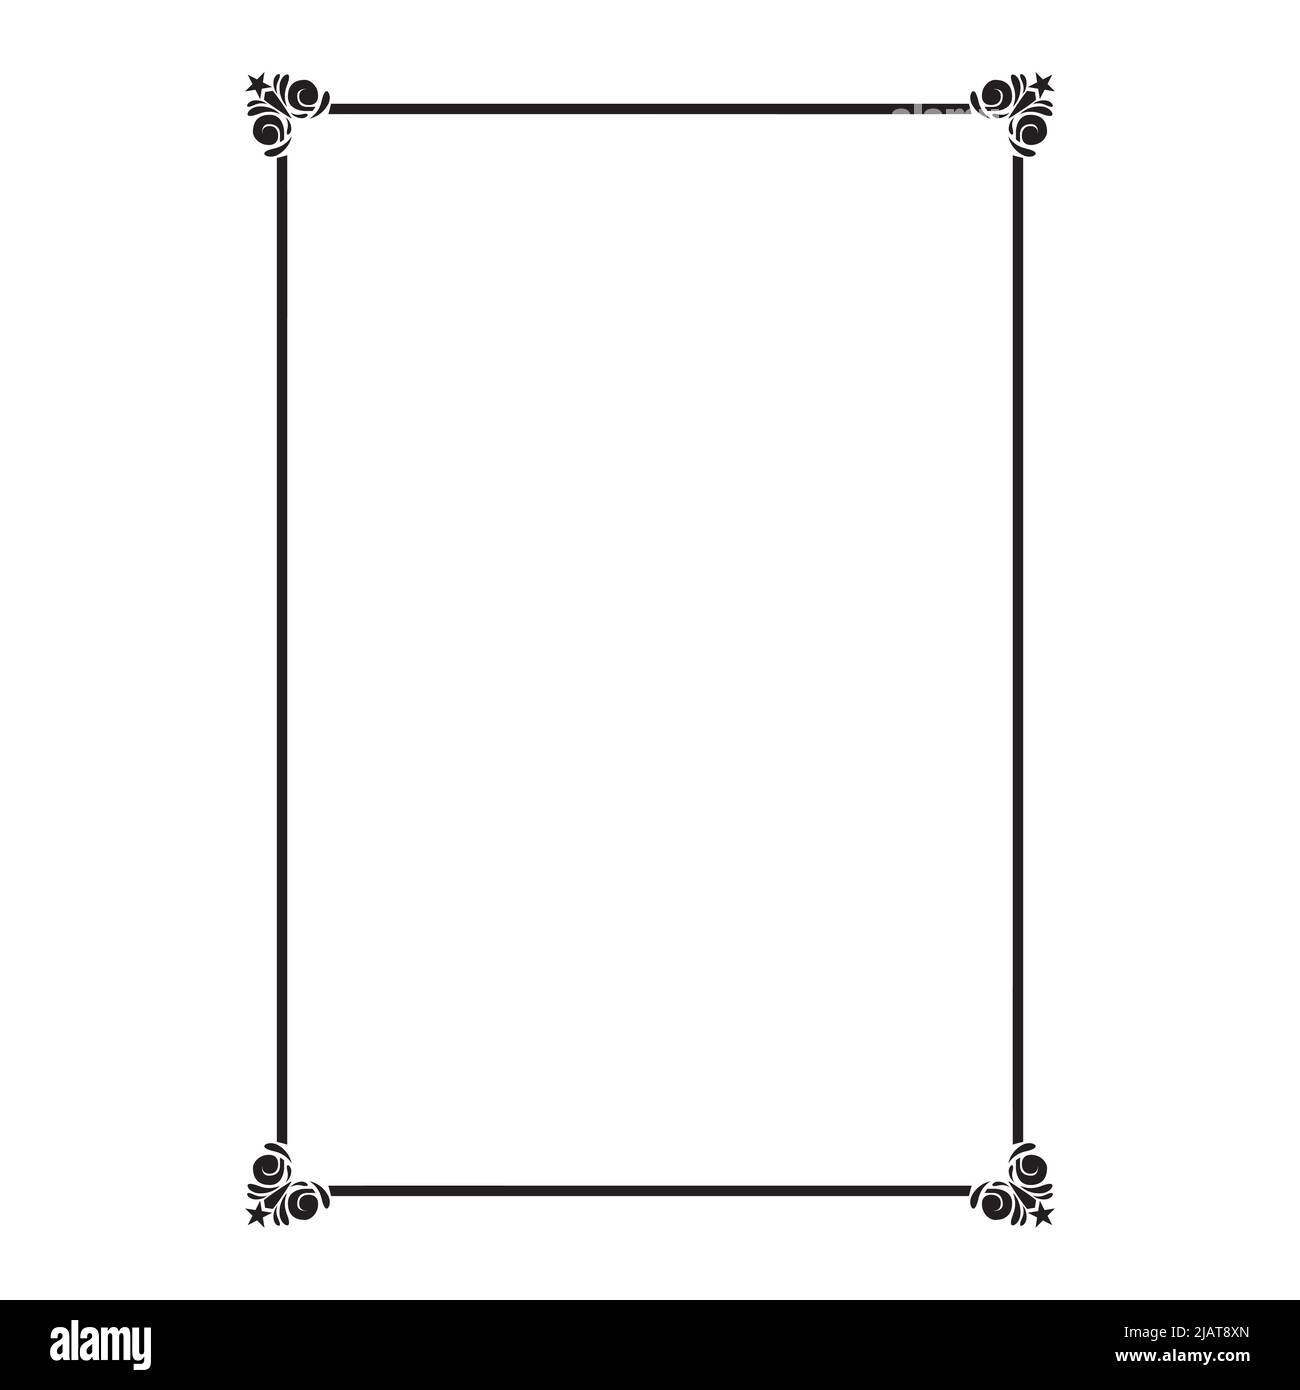 Decorative ornamental rectangle frame border Stock Vector